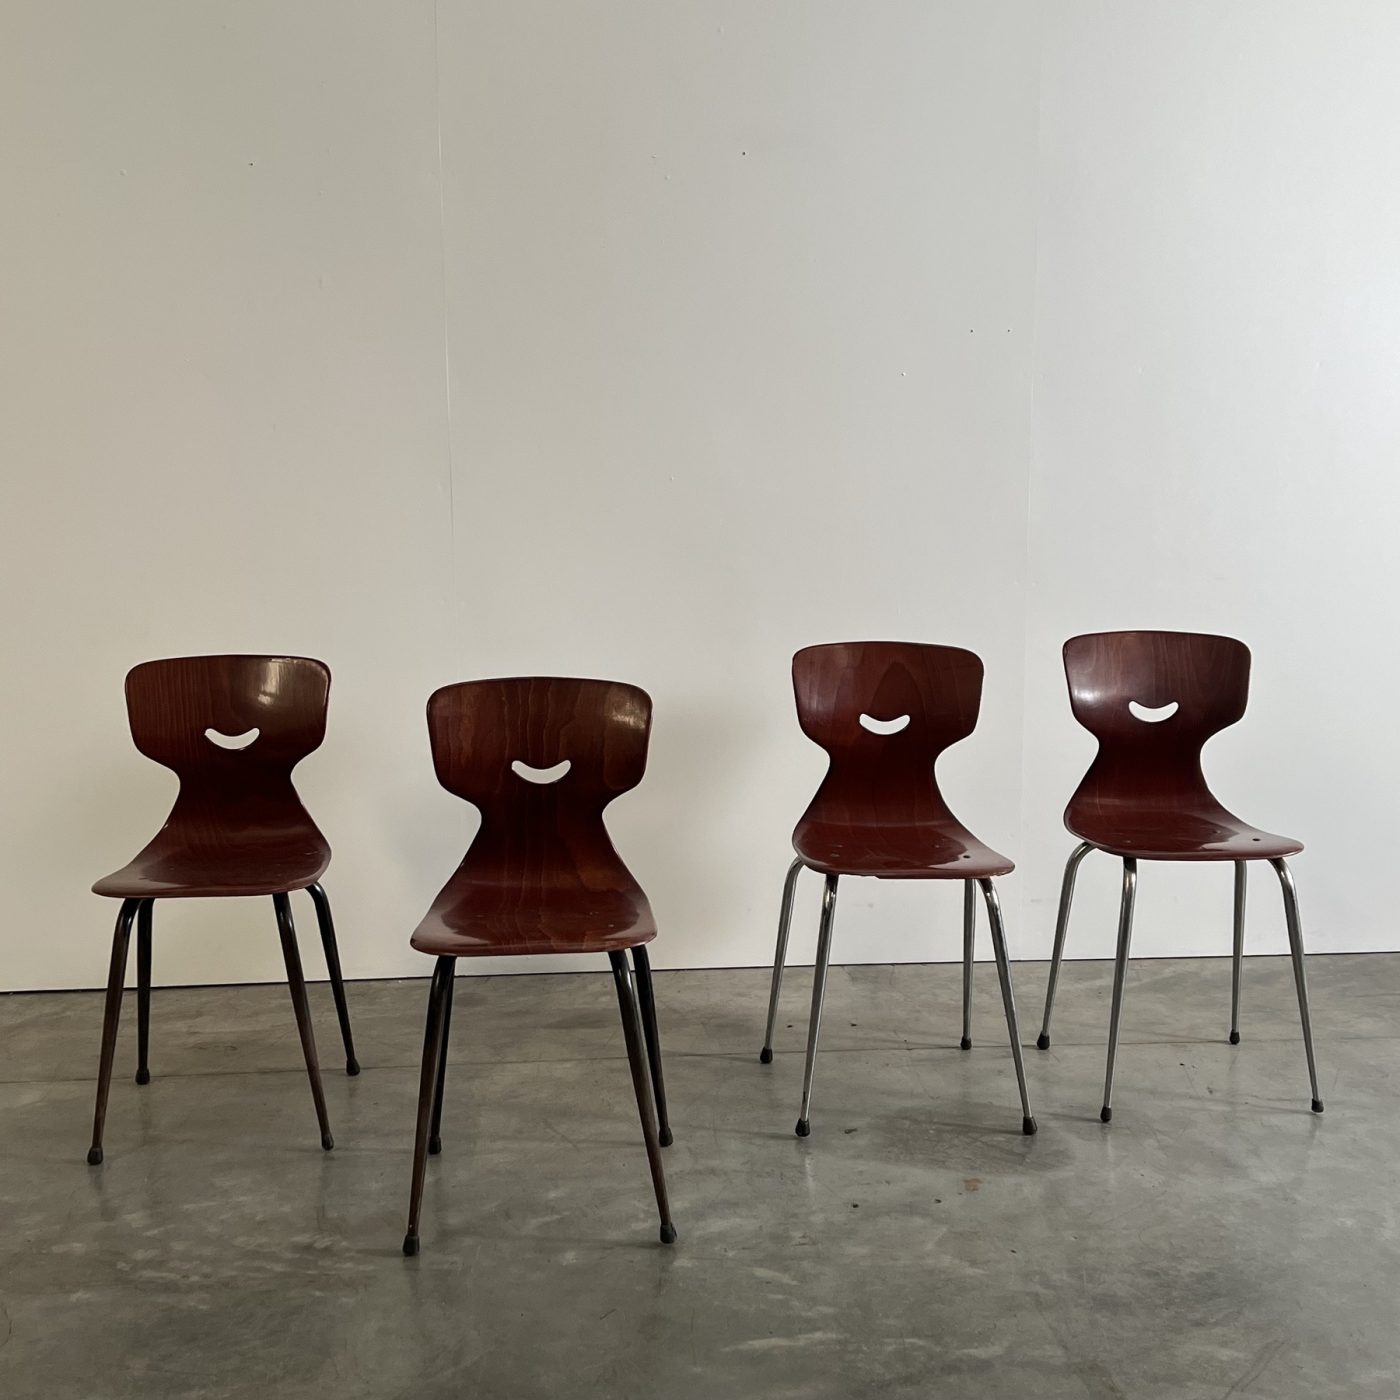 objet-vintage-chairs0005